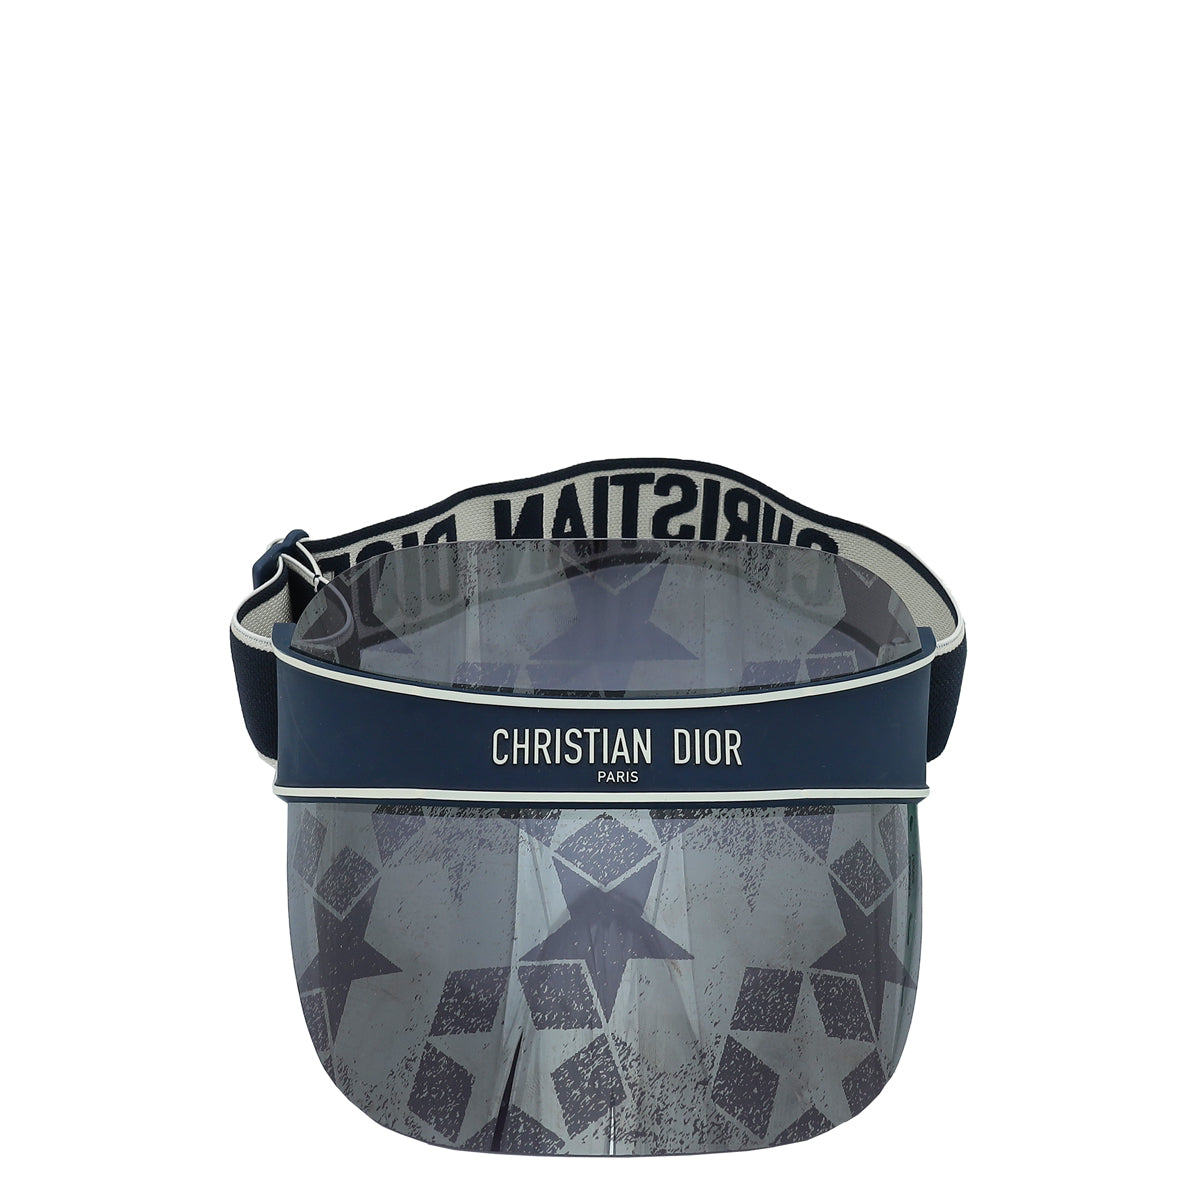 Christian Dior Navy DiorClub V1U Star Visor